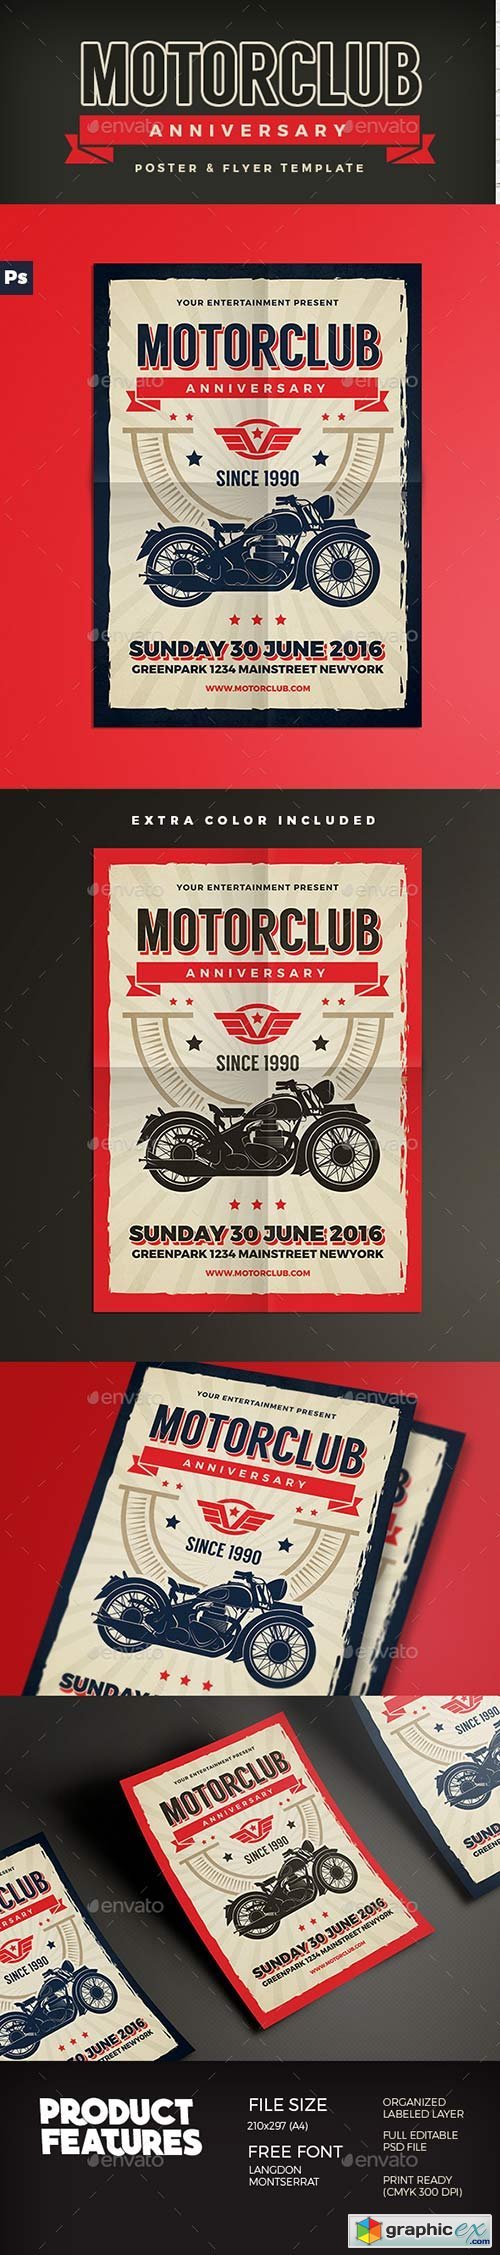 Motor Club Anniversary Event Flyer